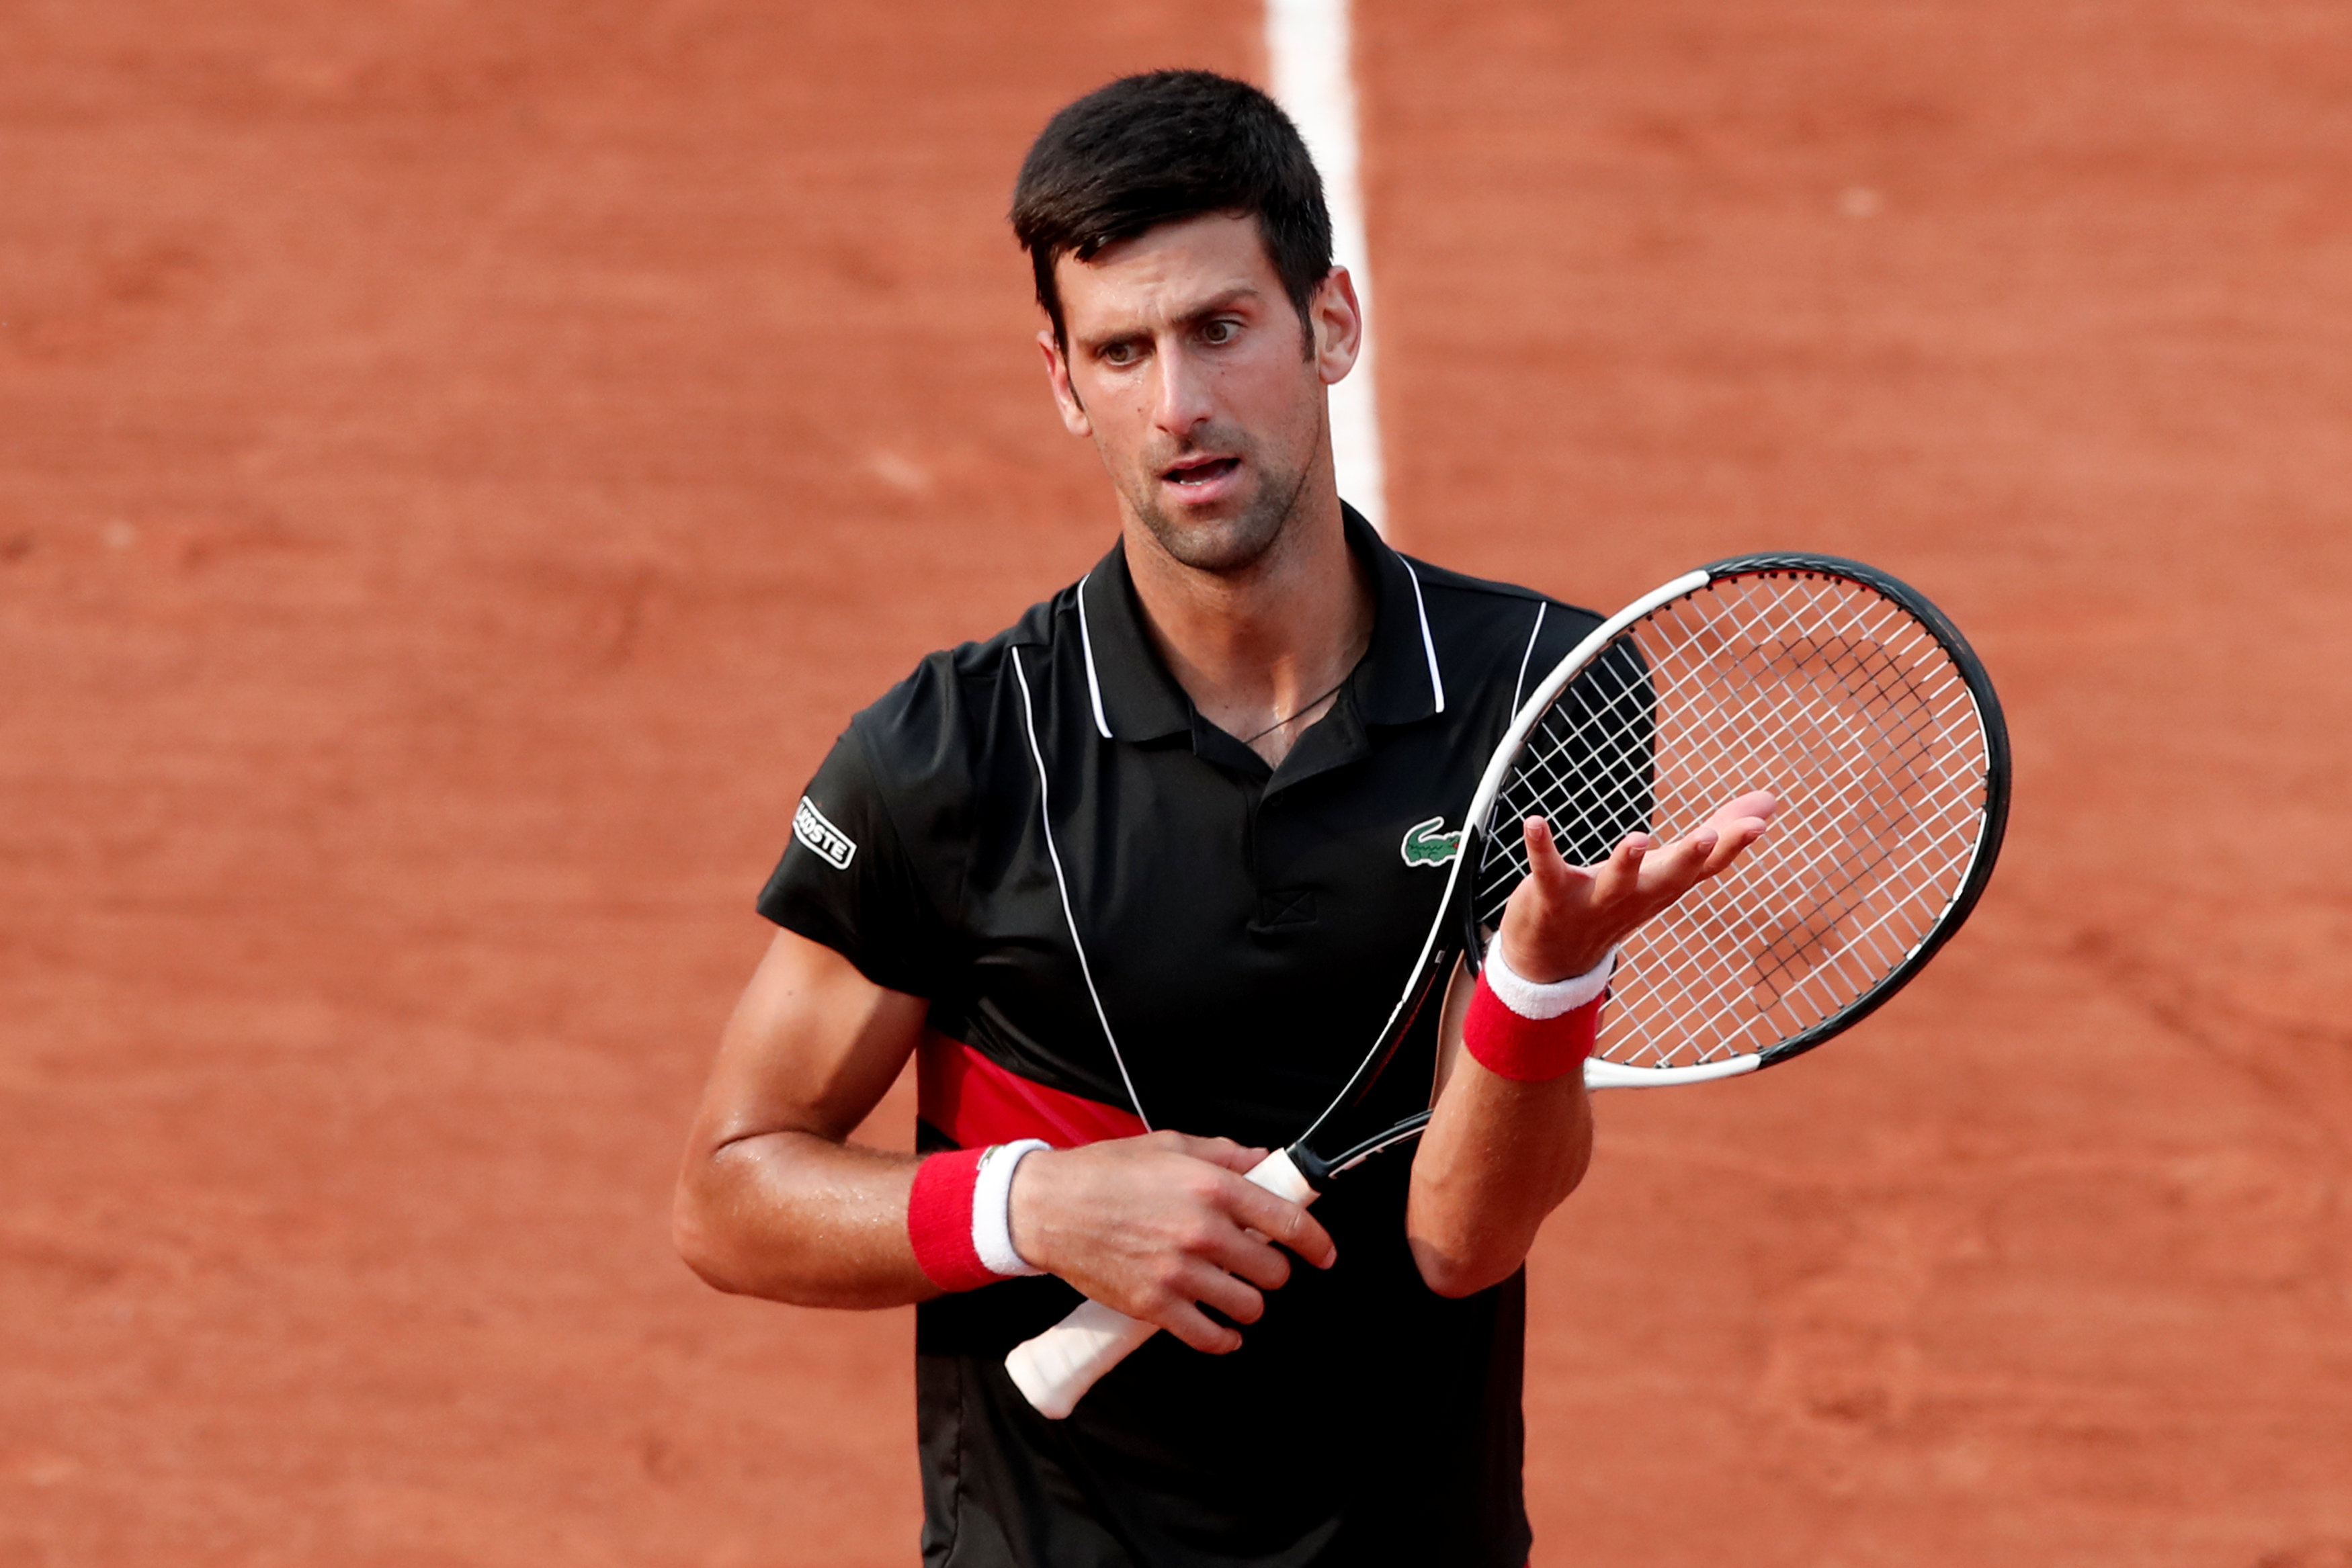 Tennis: Beaten Djokovic may skip Wimbledon